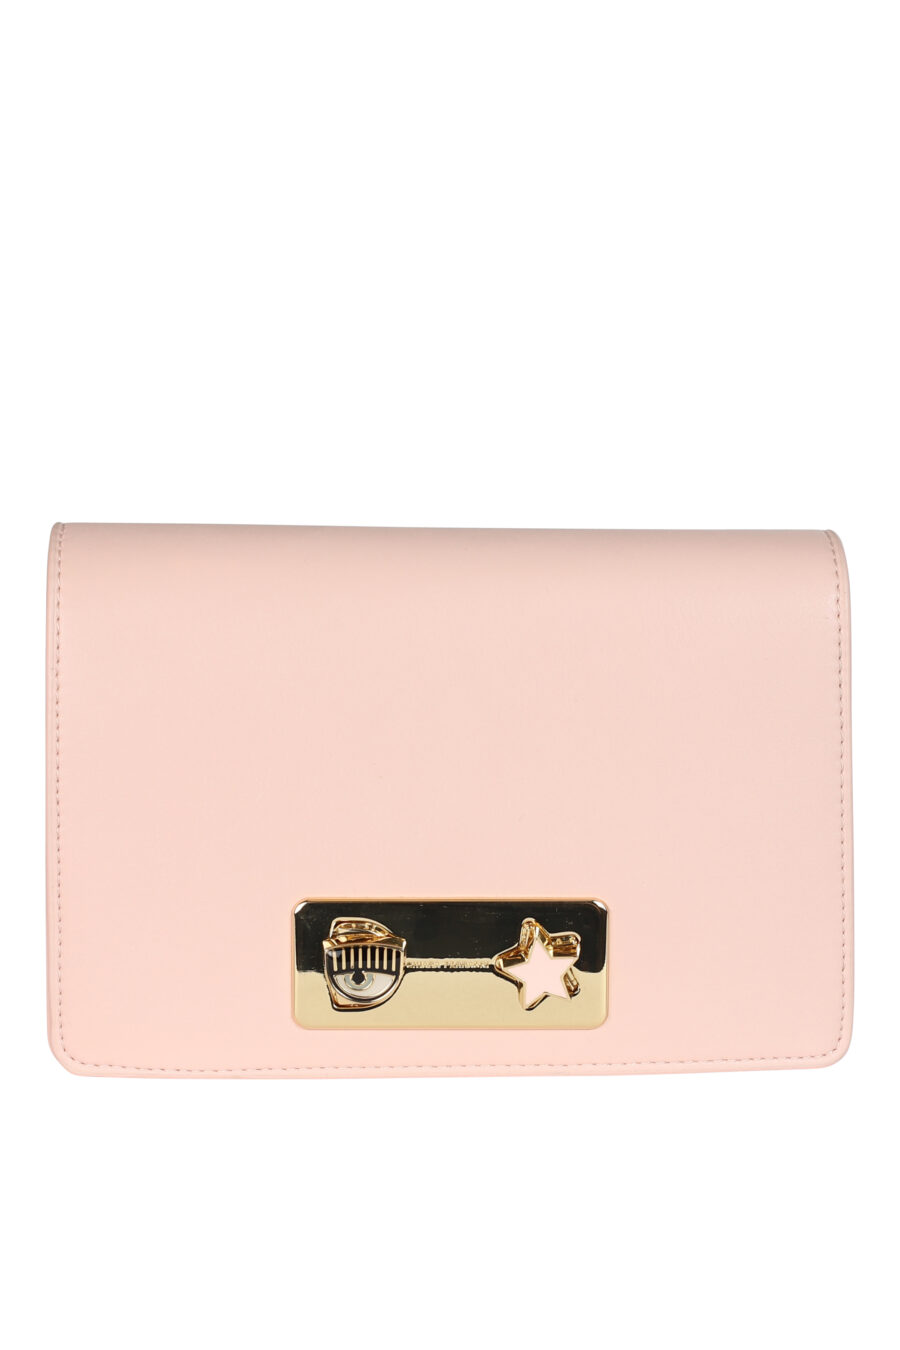 Pastel pink shoulder bag with metal star and eye lock - 8052672427700